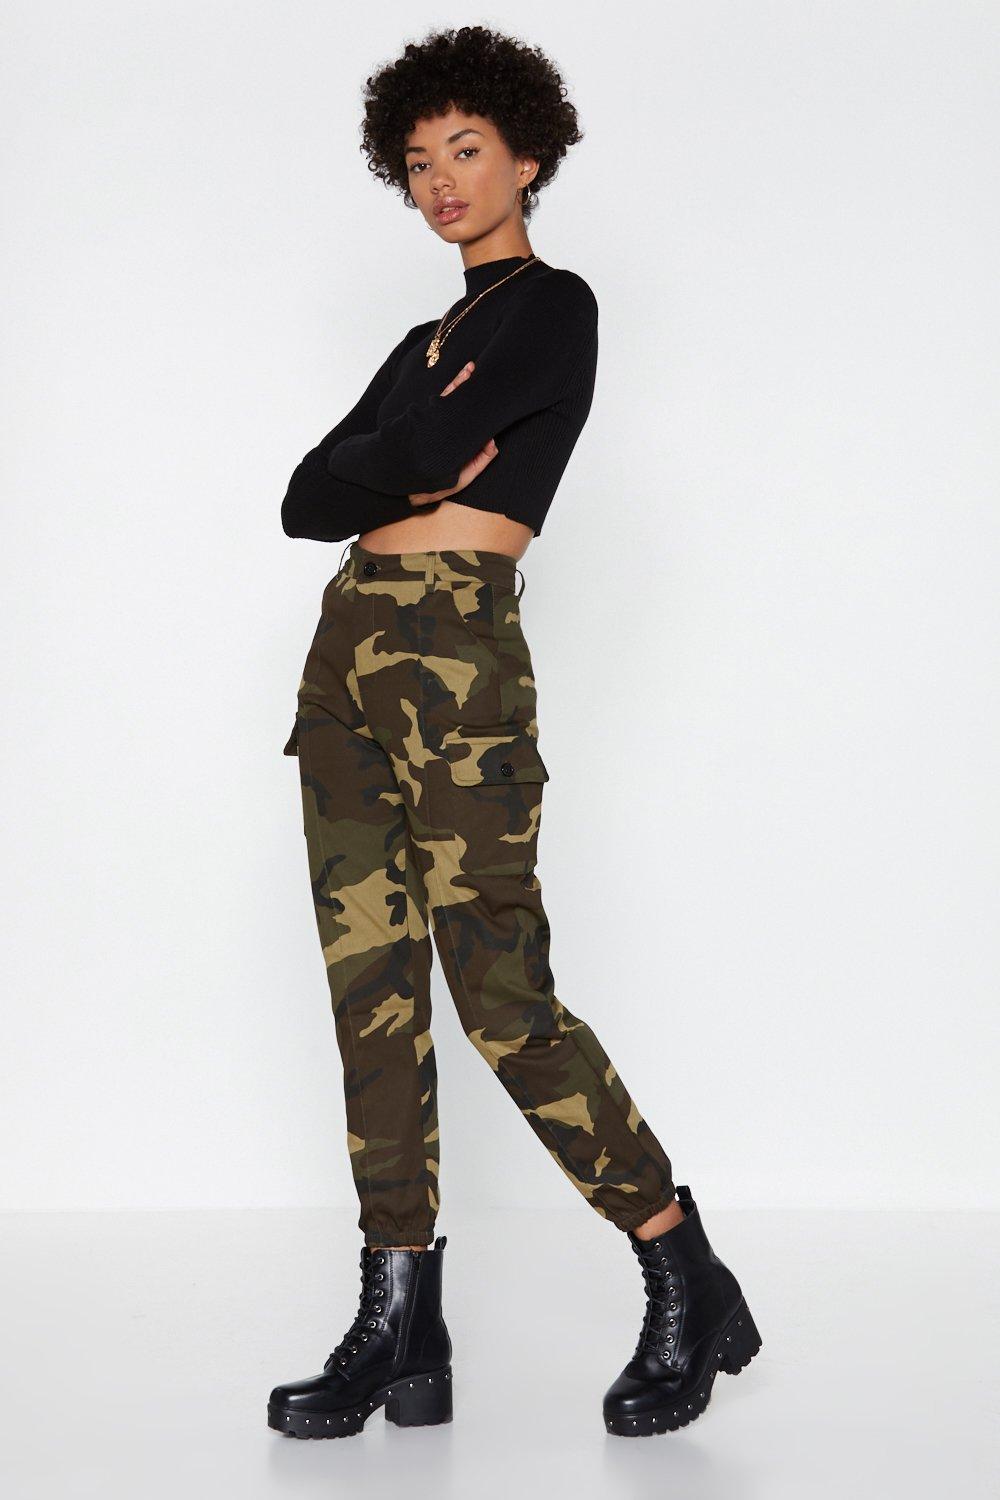 female camouflage pants